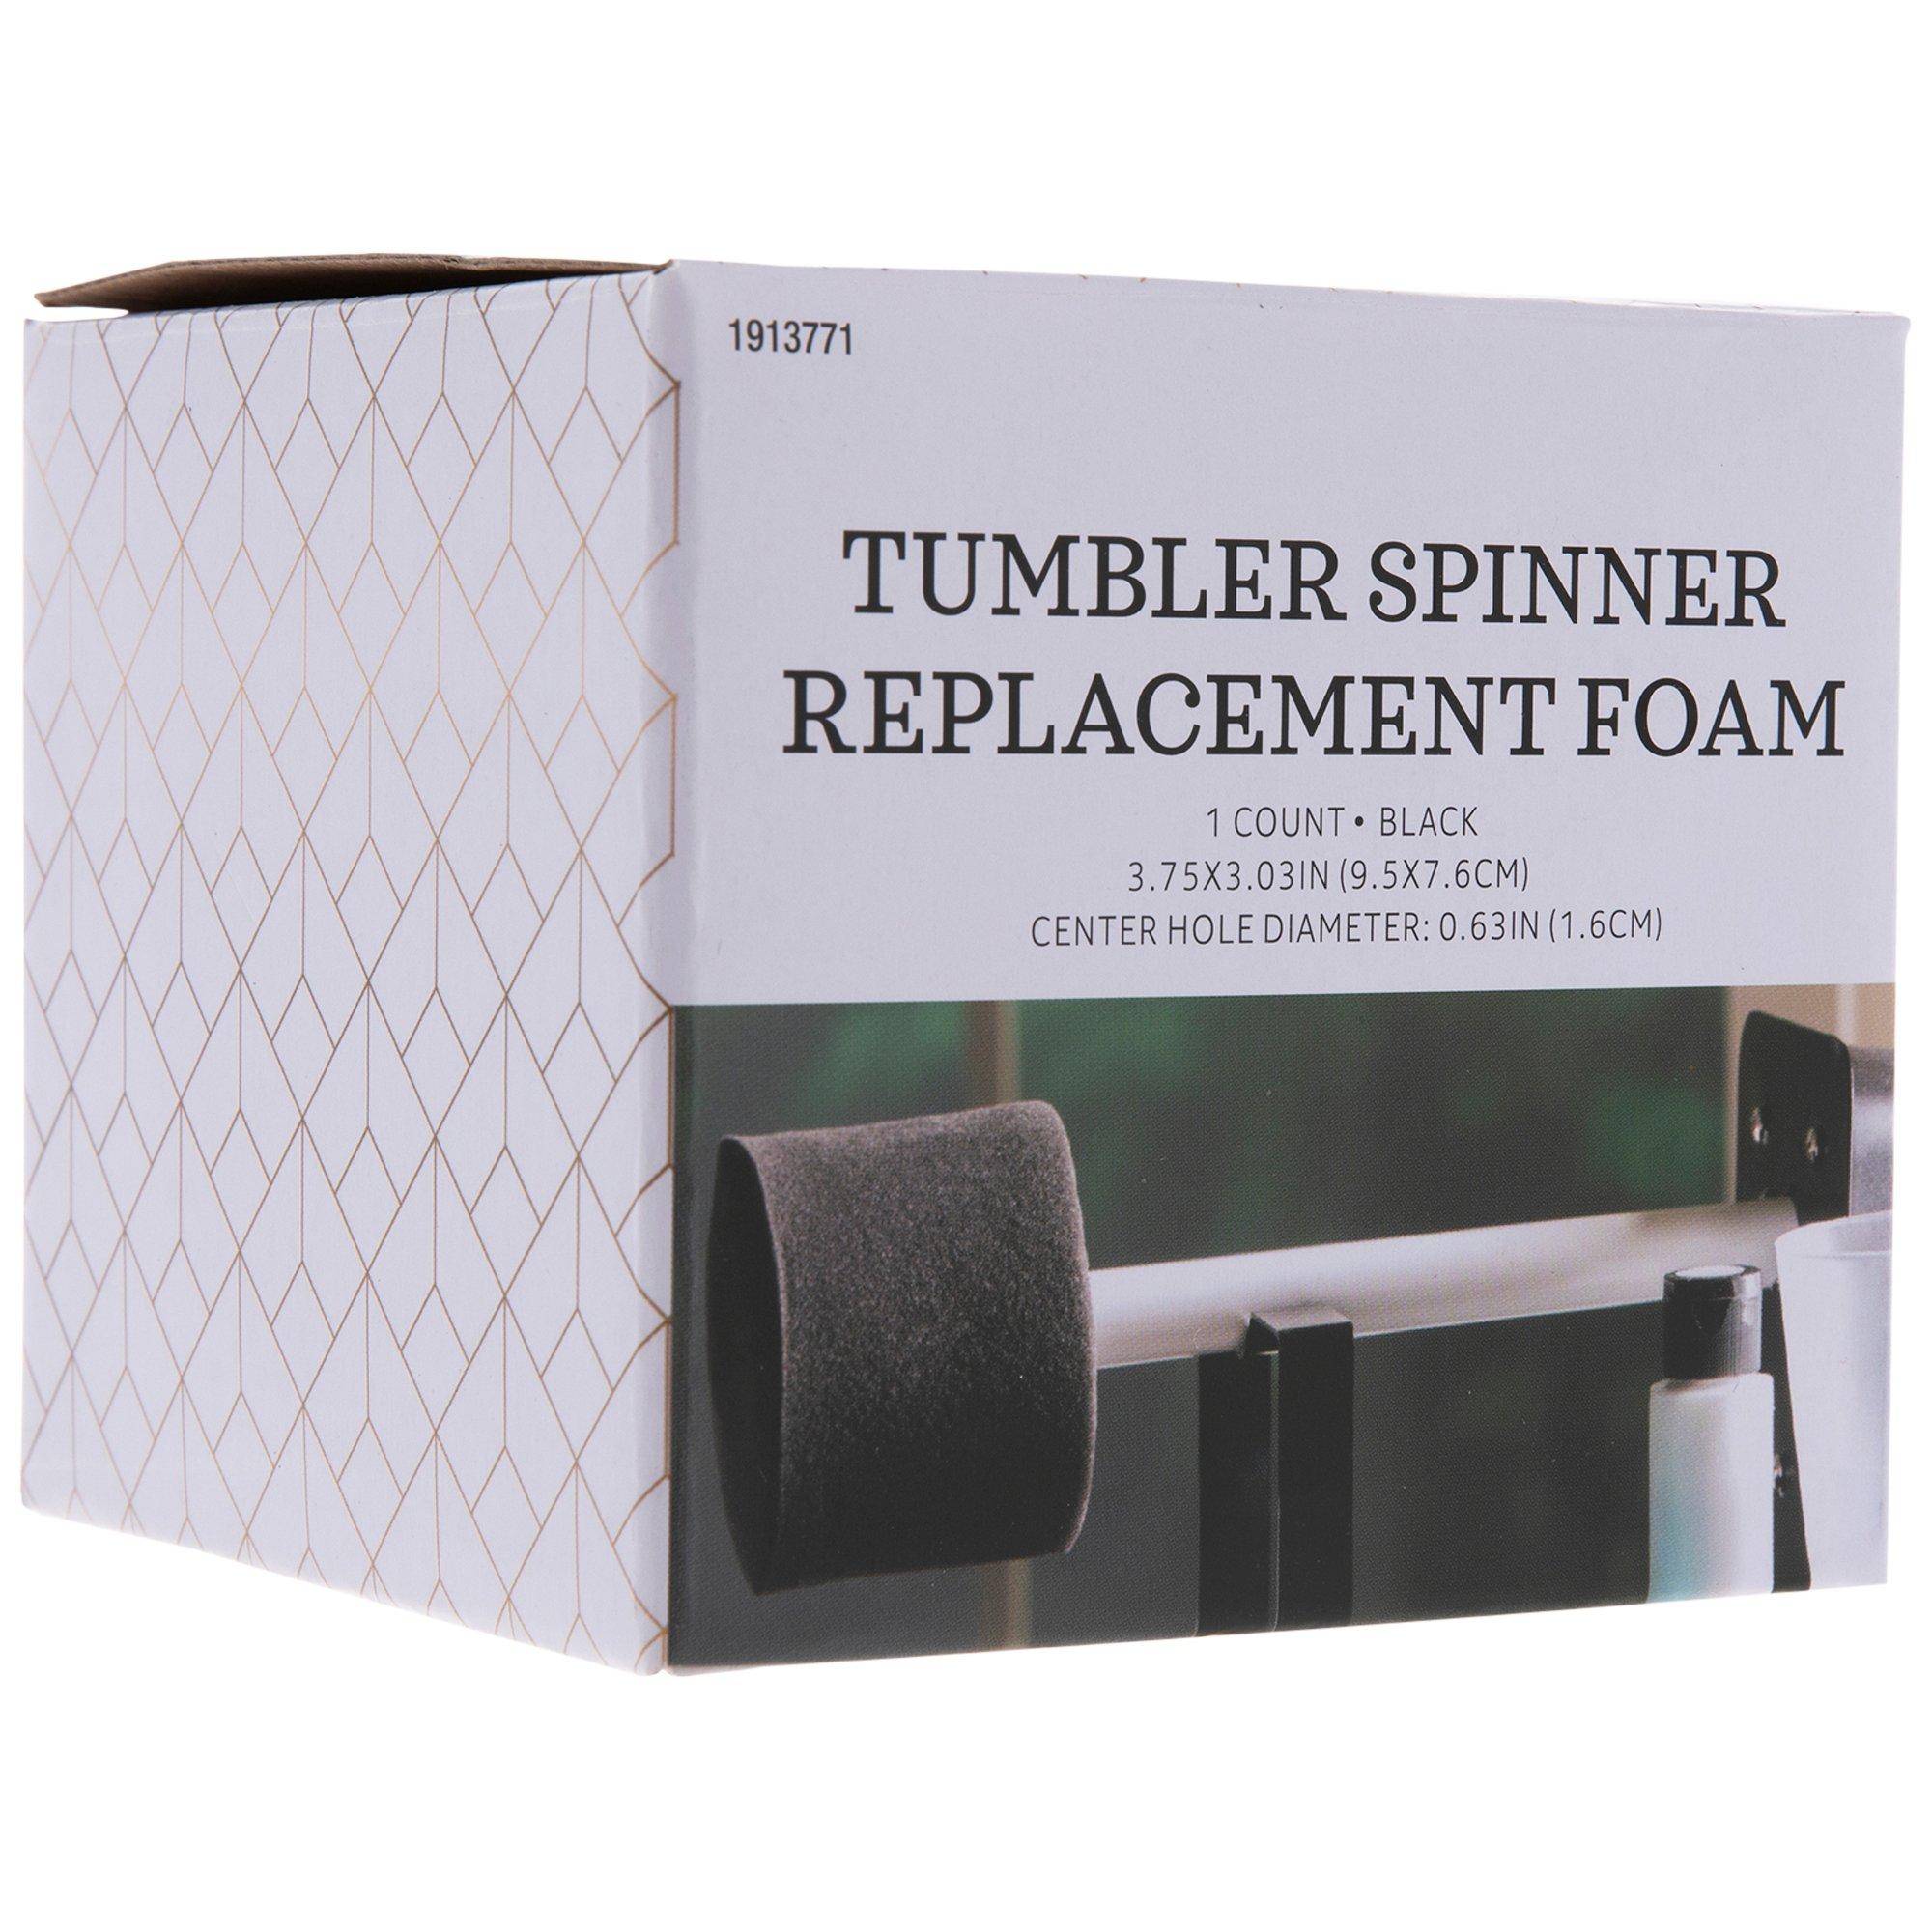 Tumbler Spinner Replacement Foam, Hobby Lobby